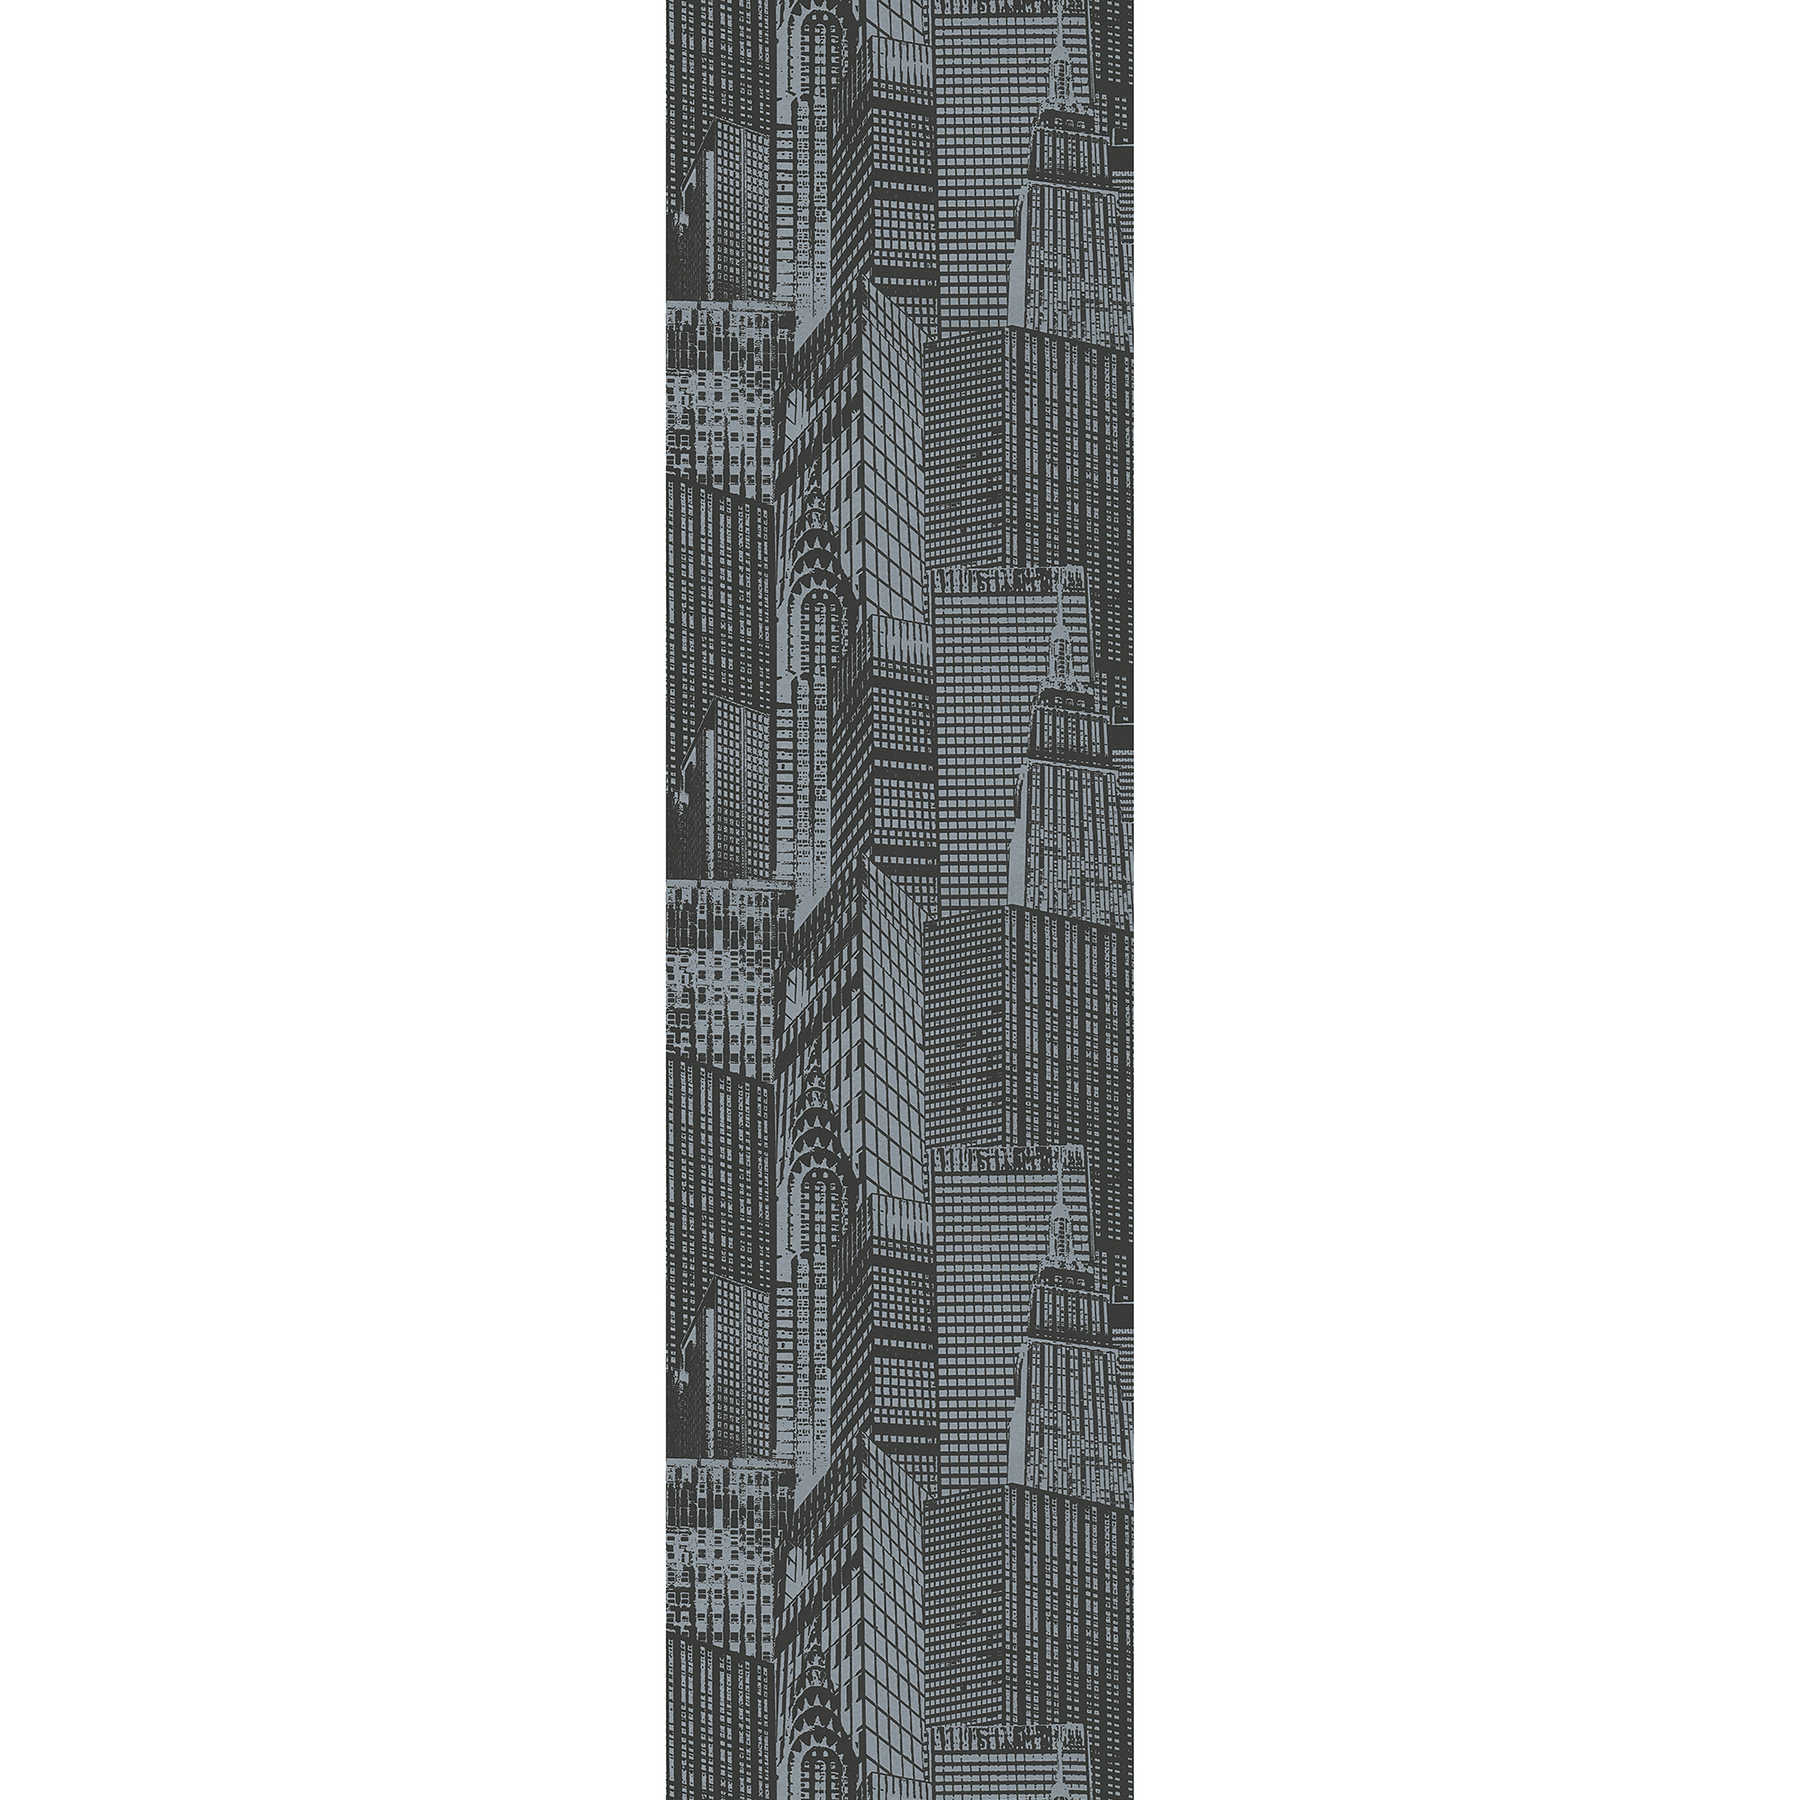         Wallpaper panel New York skyline self-adhesive - grey, black
    